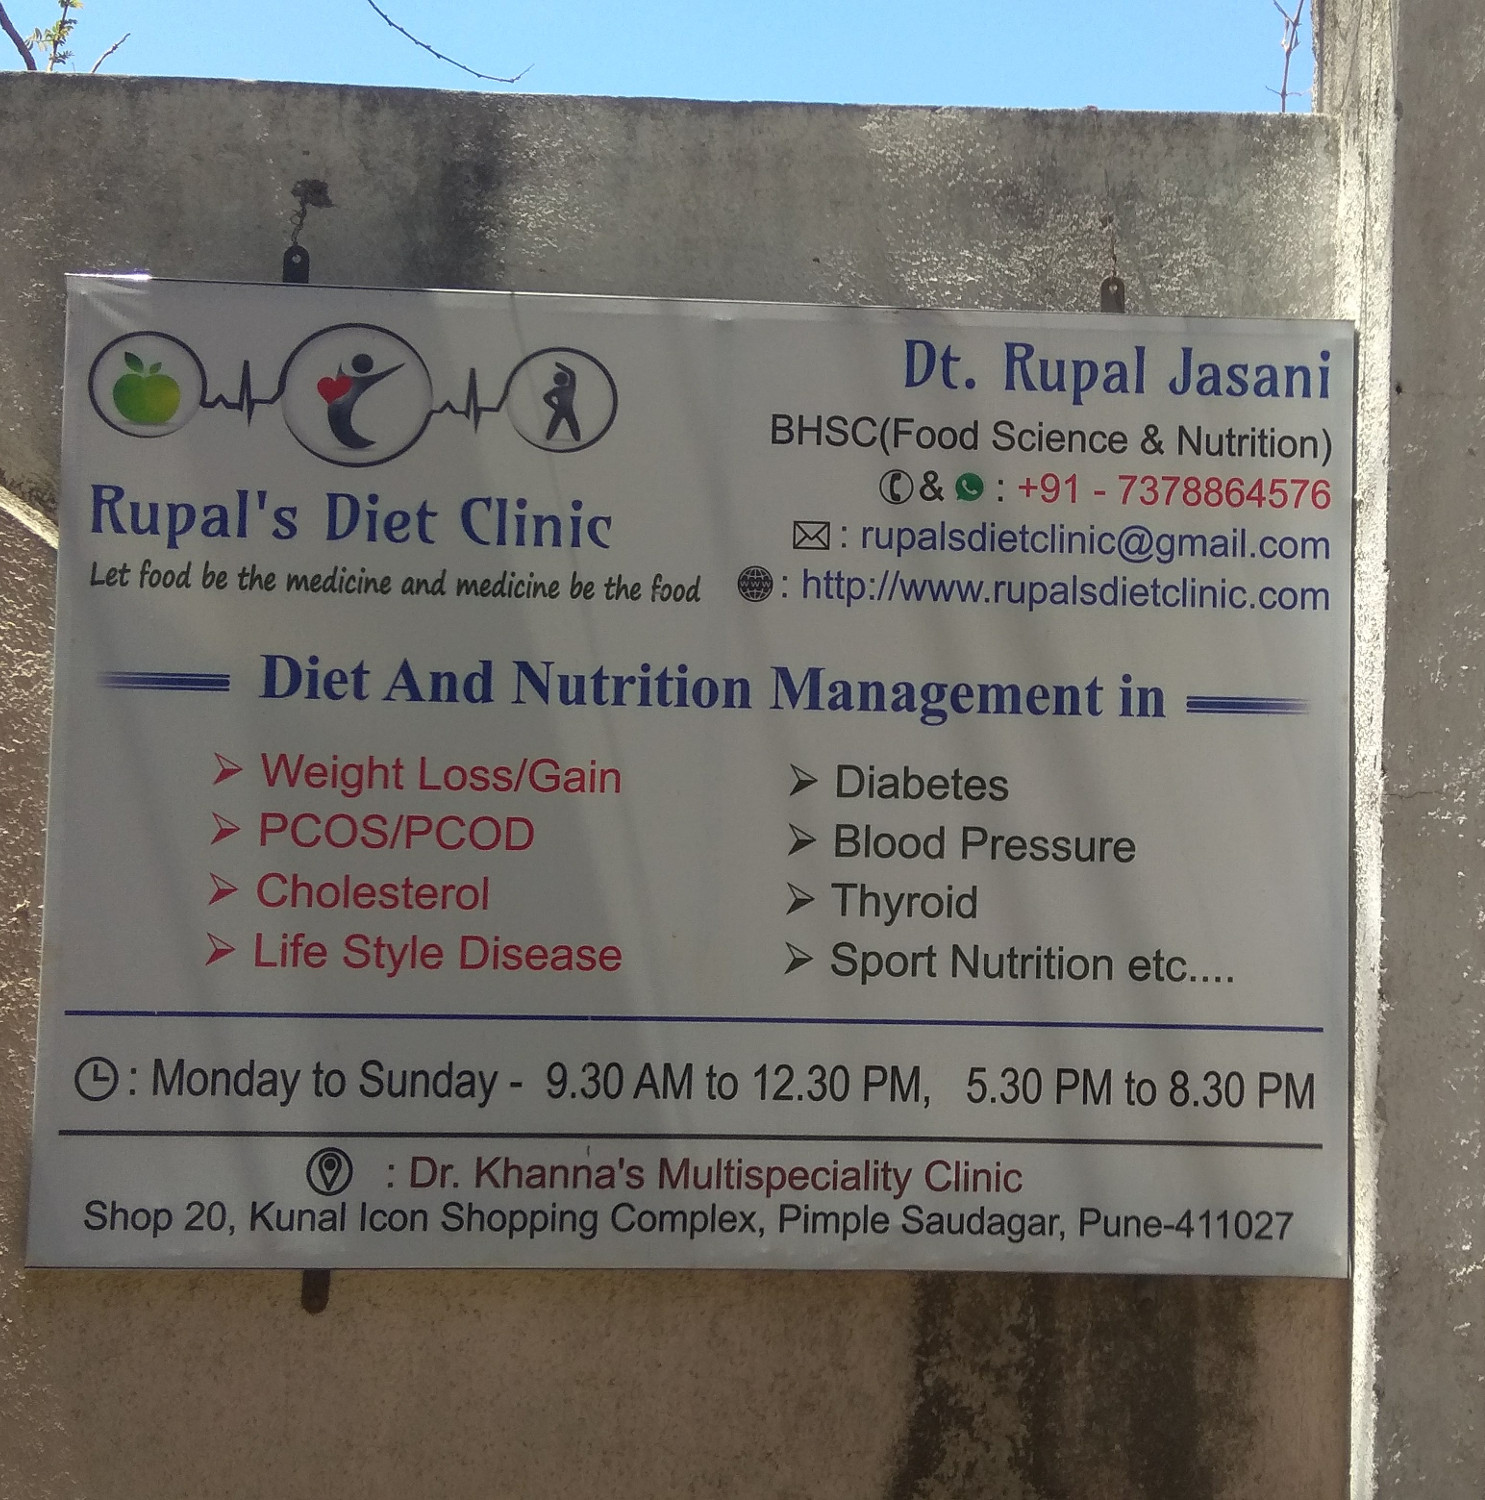 Rupals Diet Clinic Board